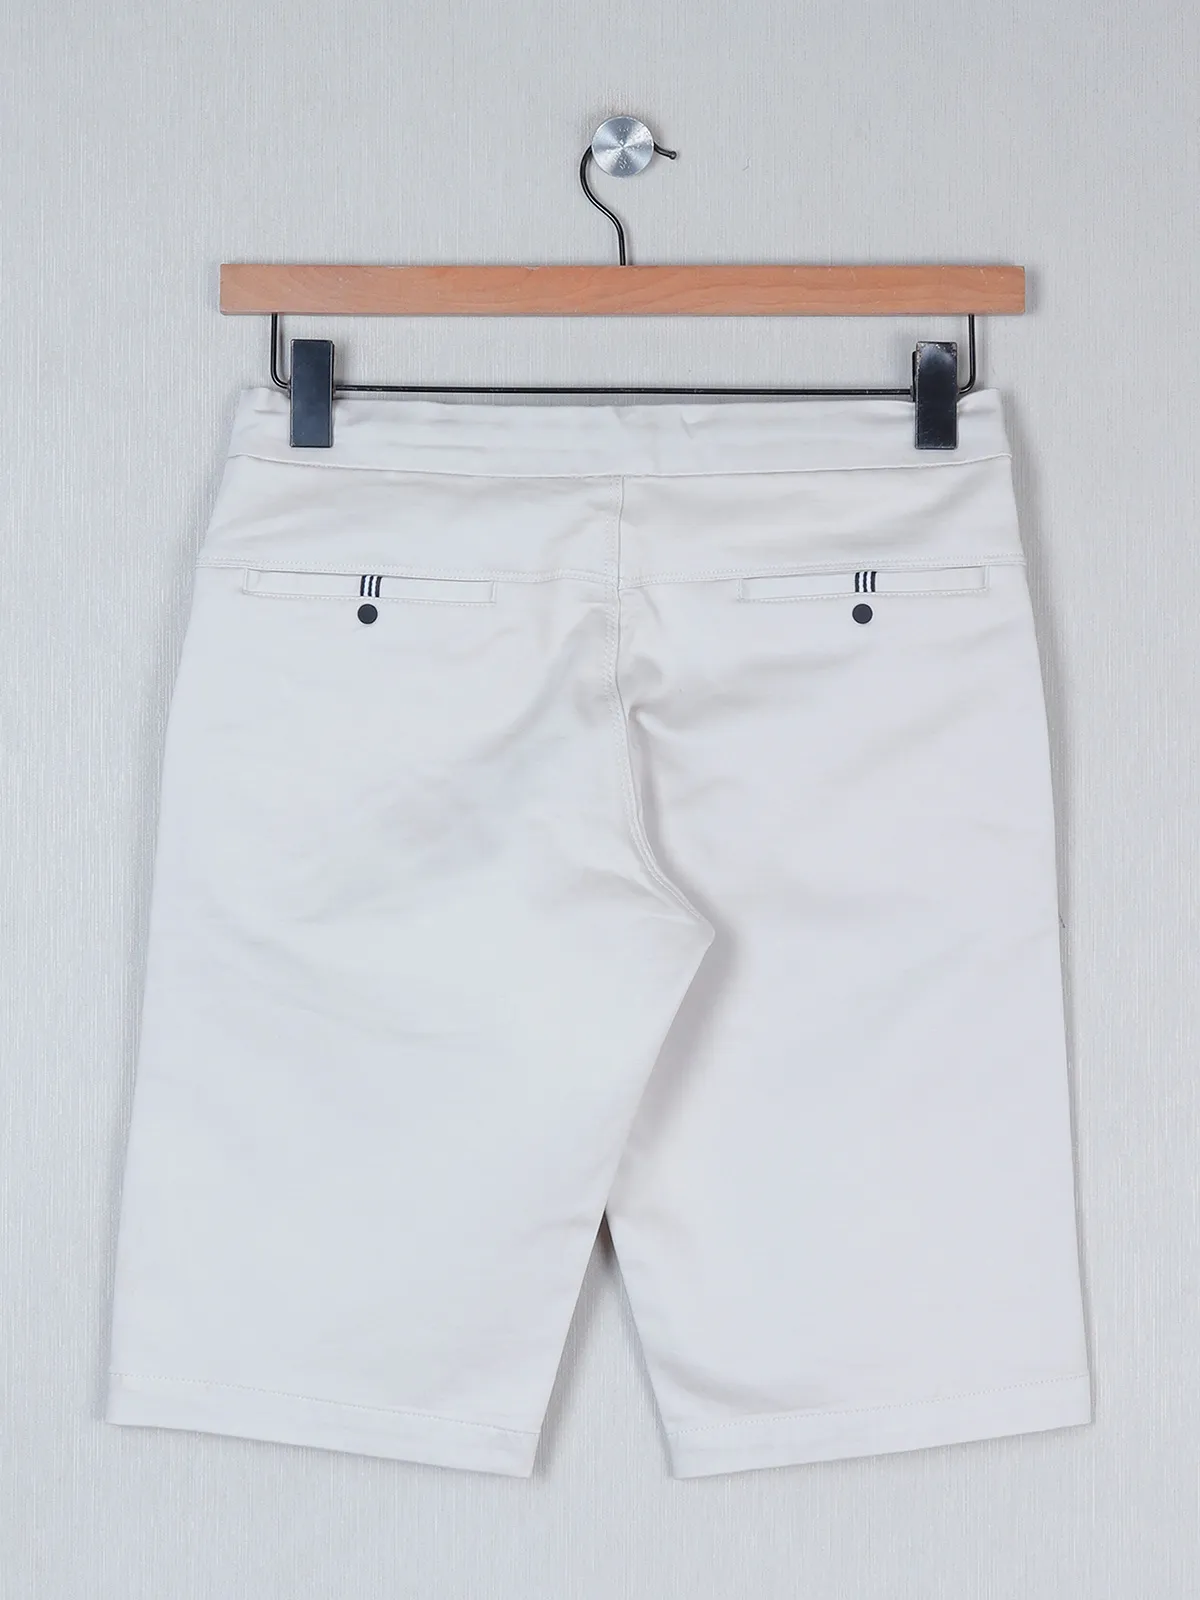 TYZ solid cream cotton slim fit shorts